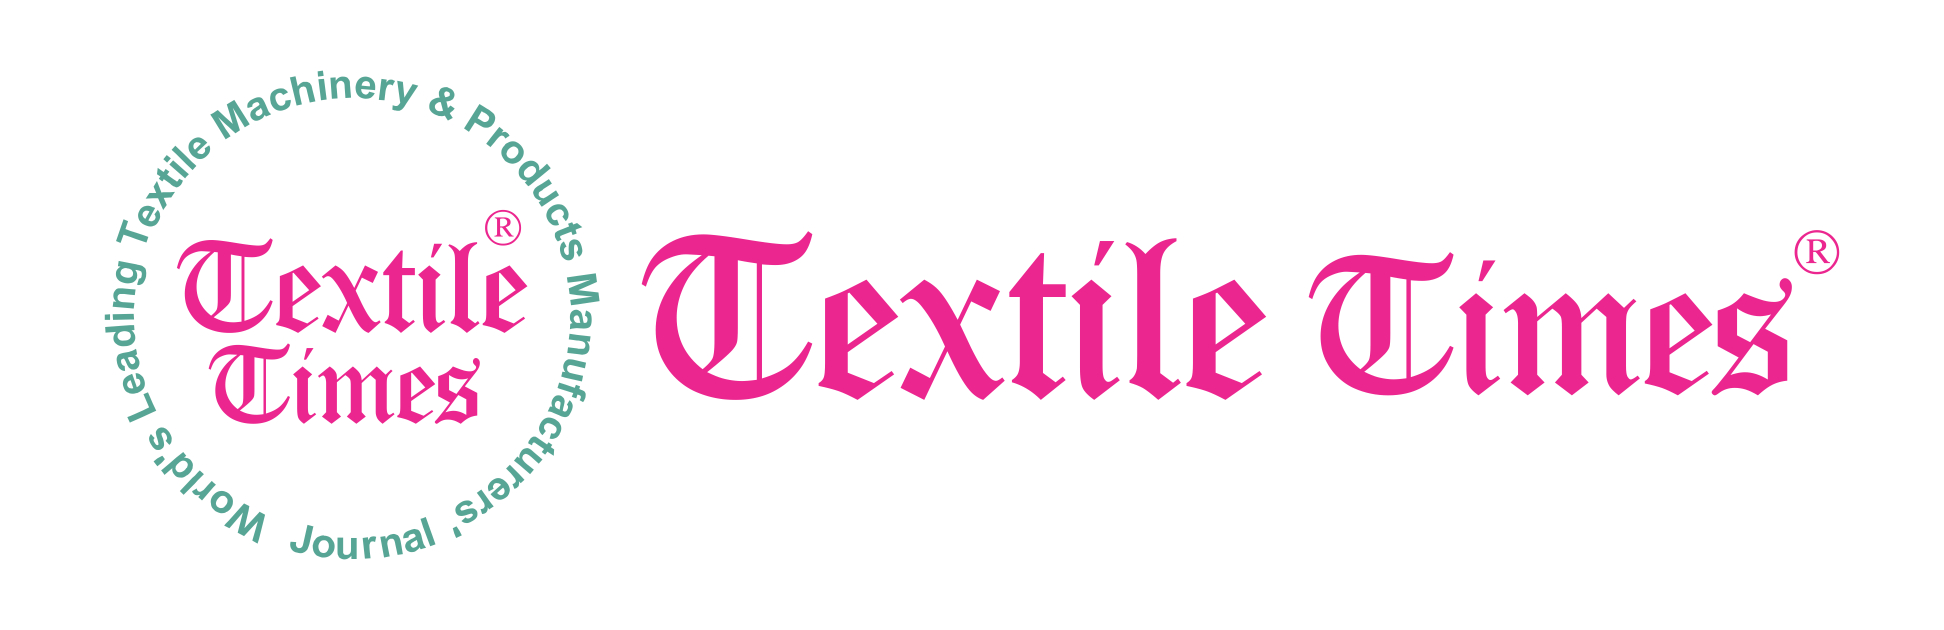 textile times